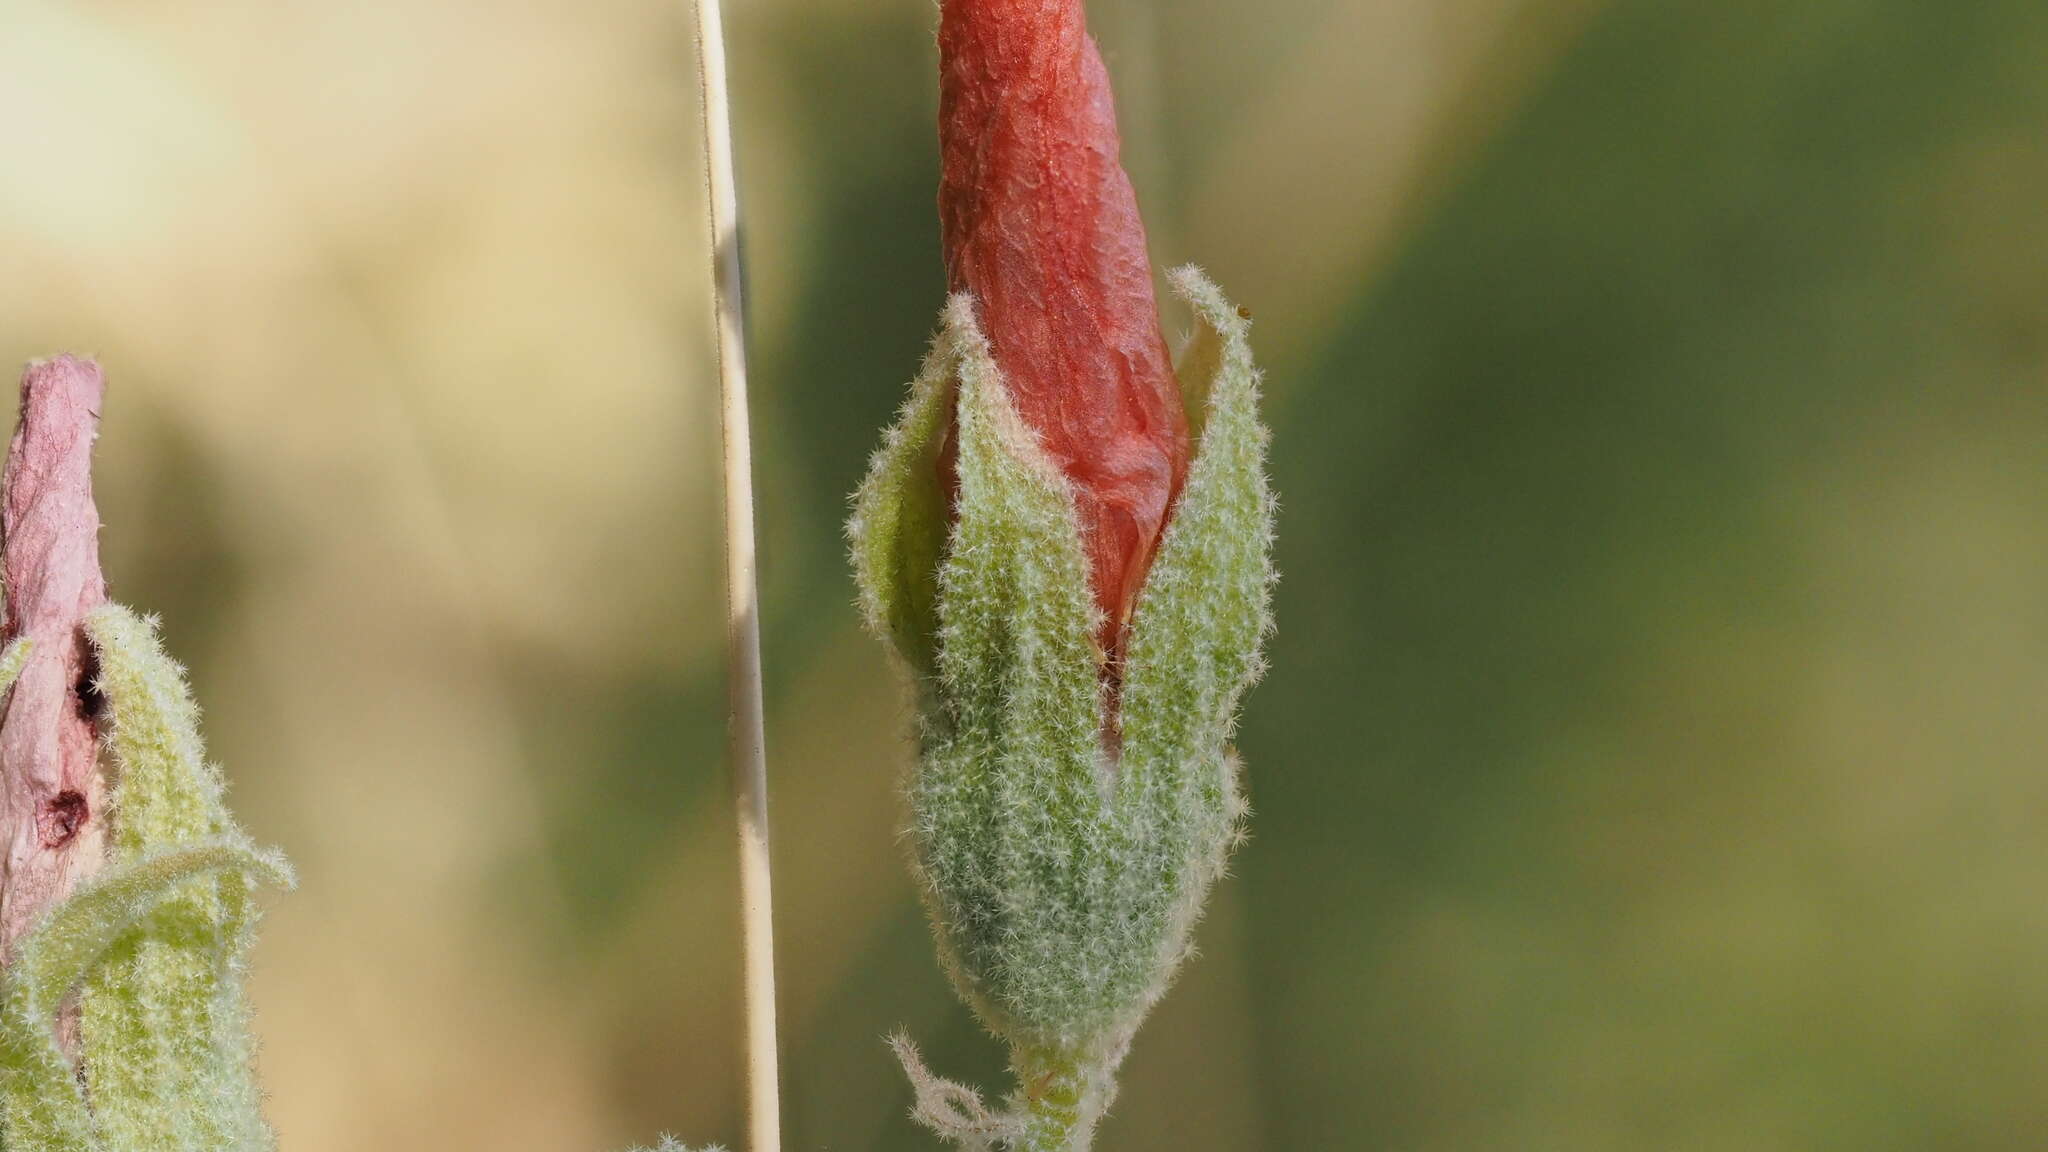 Sivun Sphaeralcea ambigua var. rugosa (Kearney) Kearney kuva